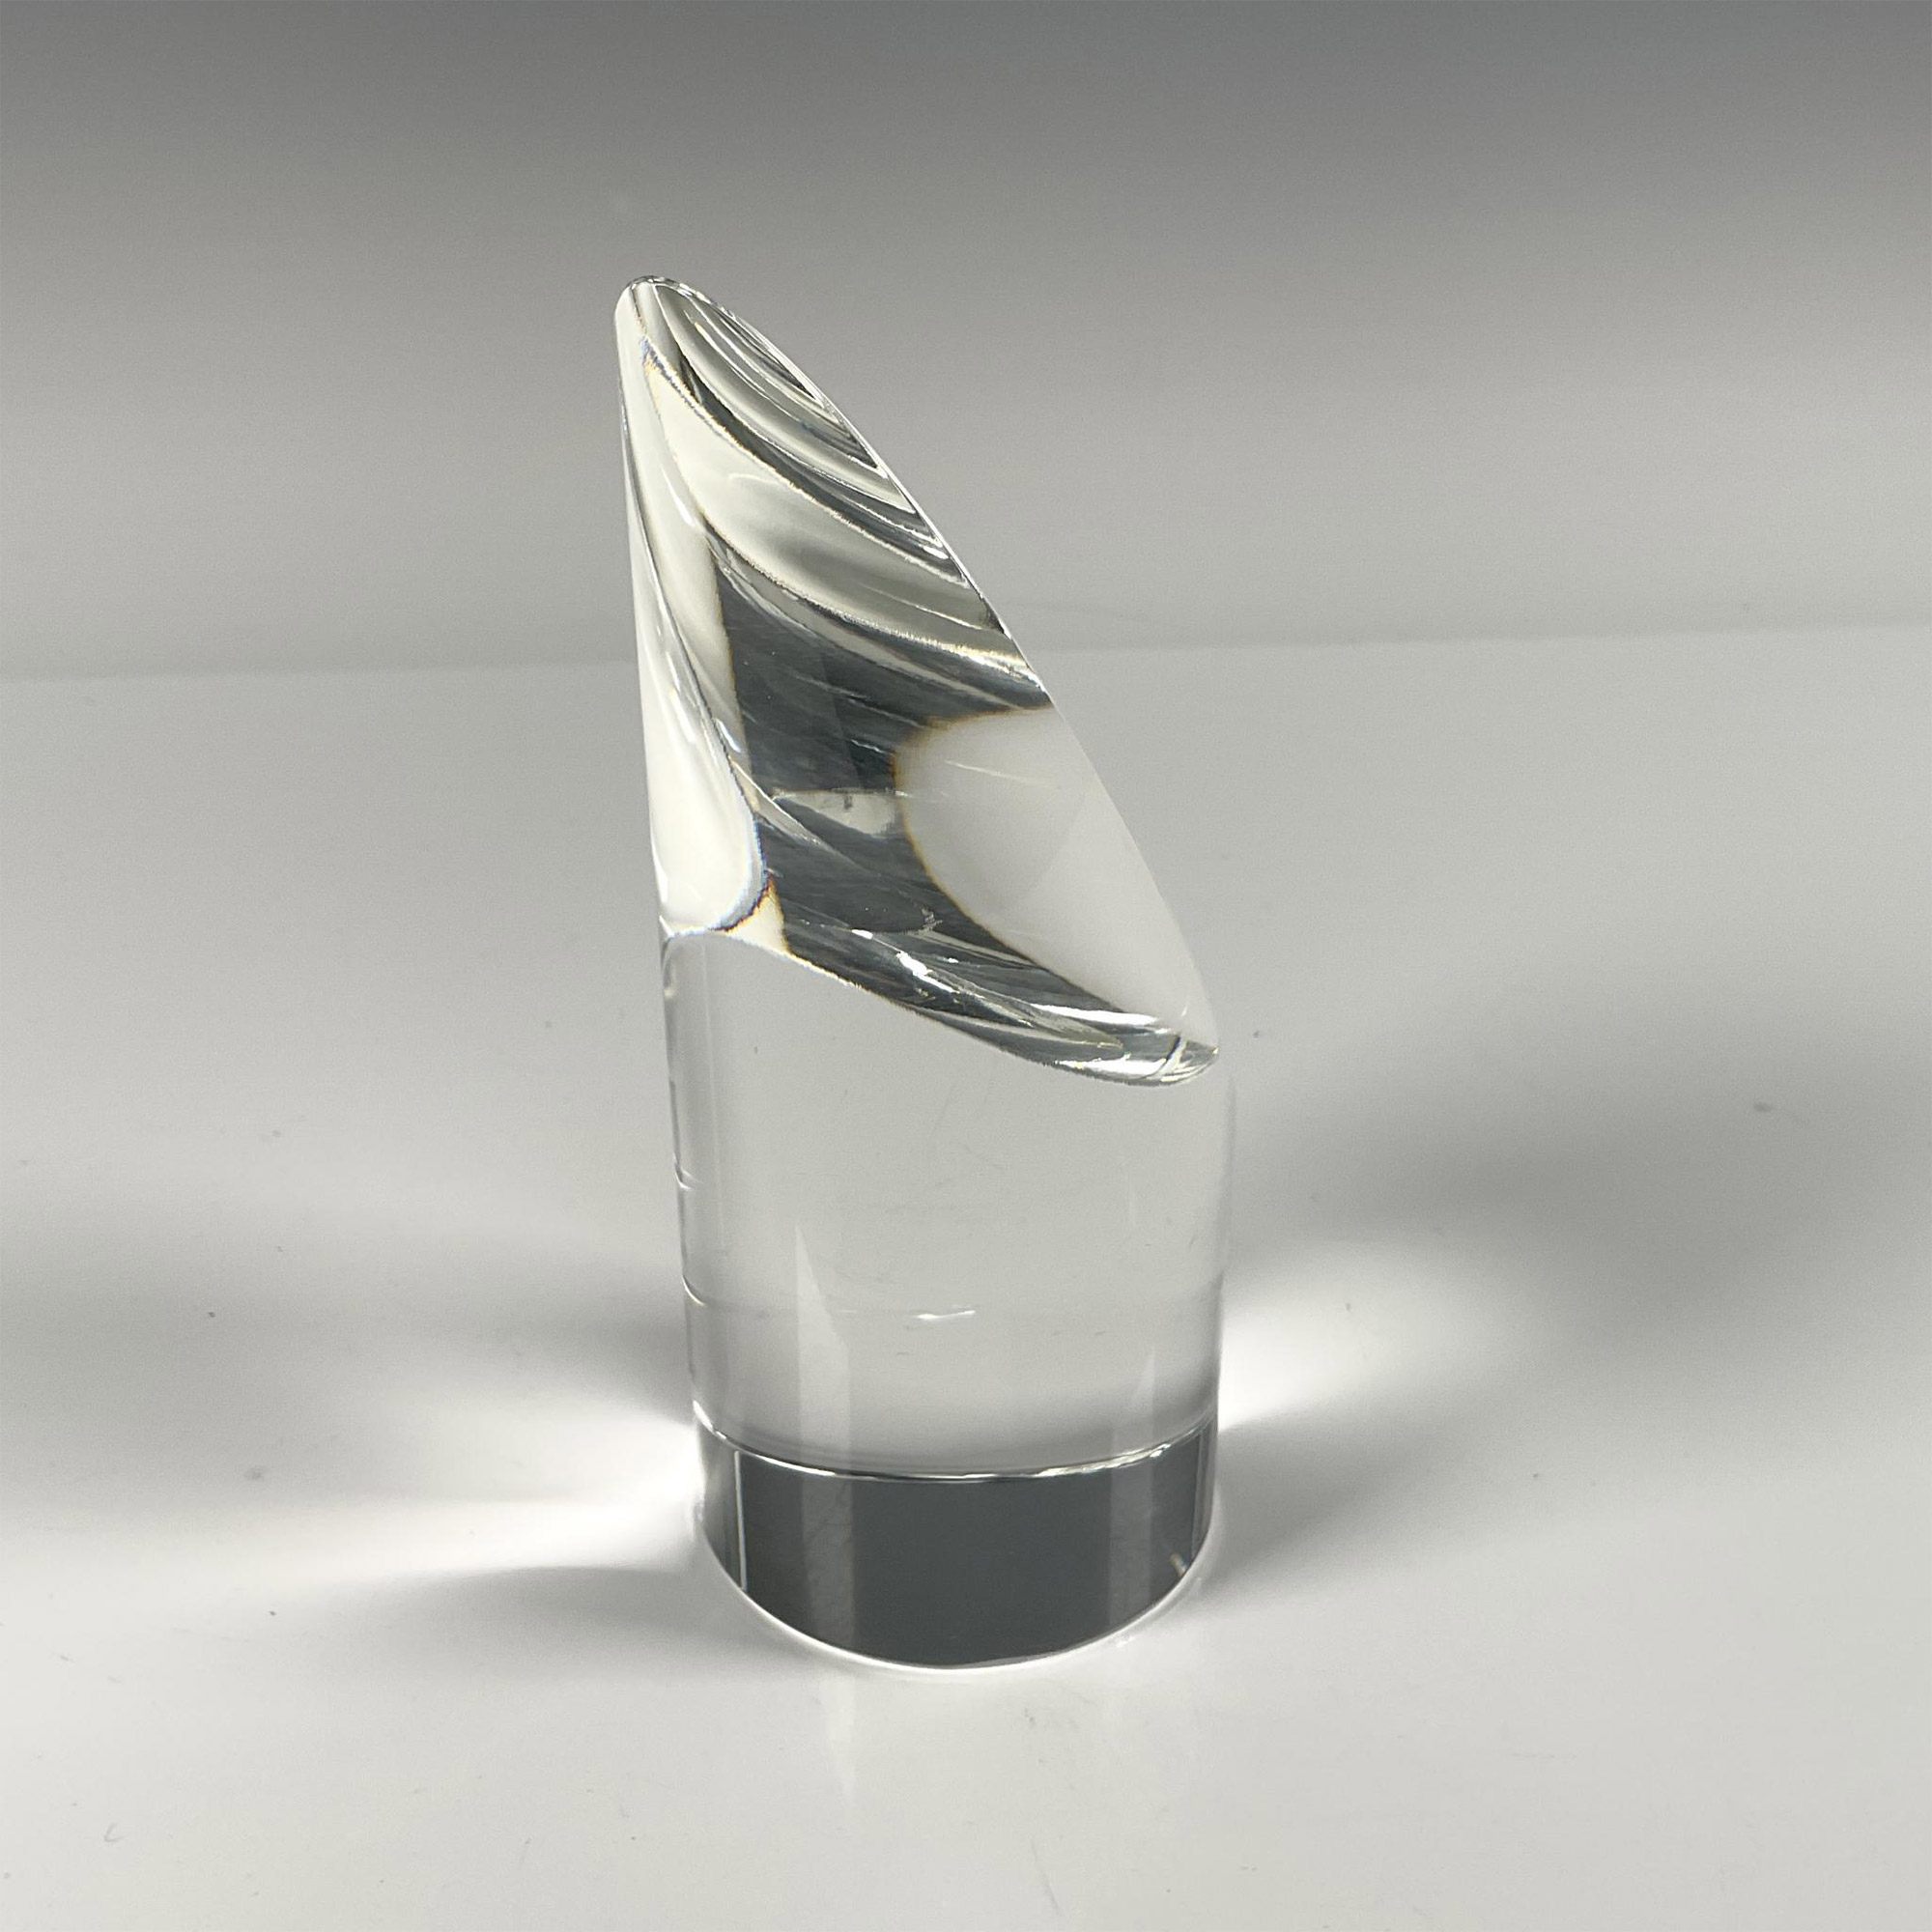 Orrefors Crystal Engravable Award, Concord Medium - Image 2 of 4